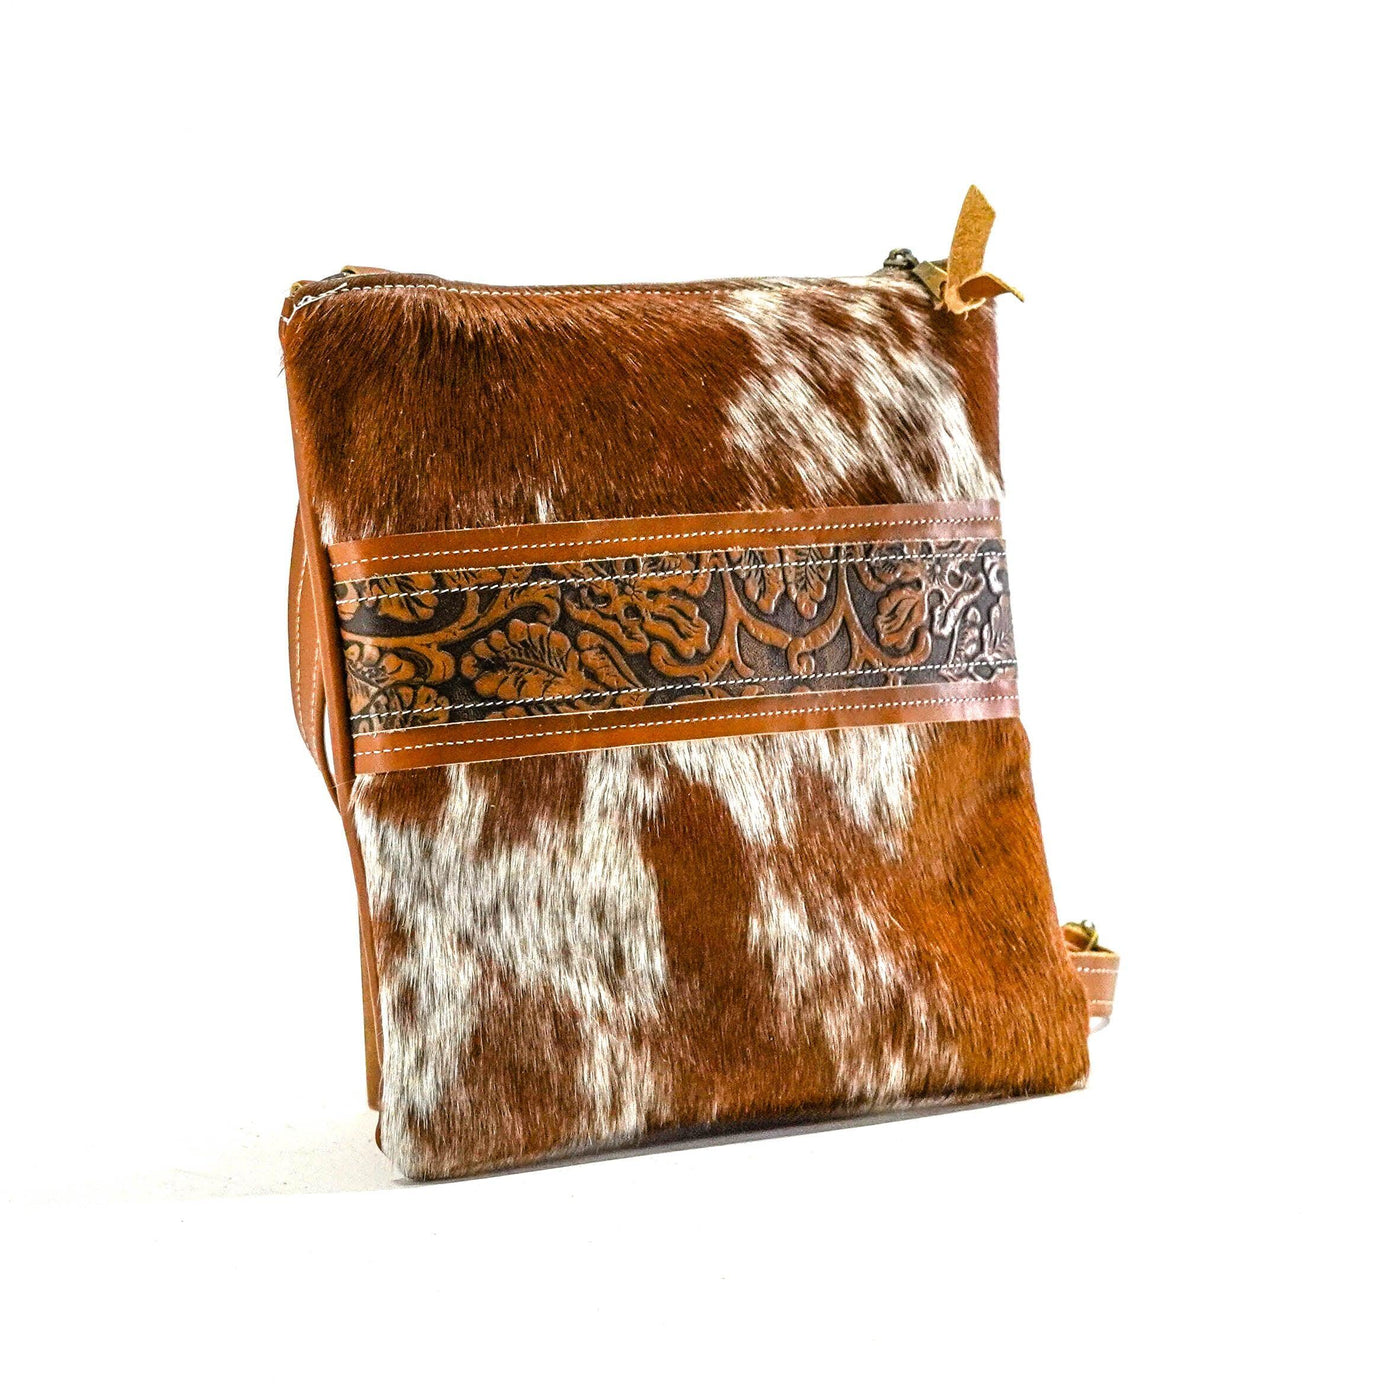 Shania - Longhorn w/ Honey Tool-Shania-Western-Cowhide-Bags-Handmade-Products-Gifts-Dancing Cactus Designs